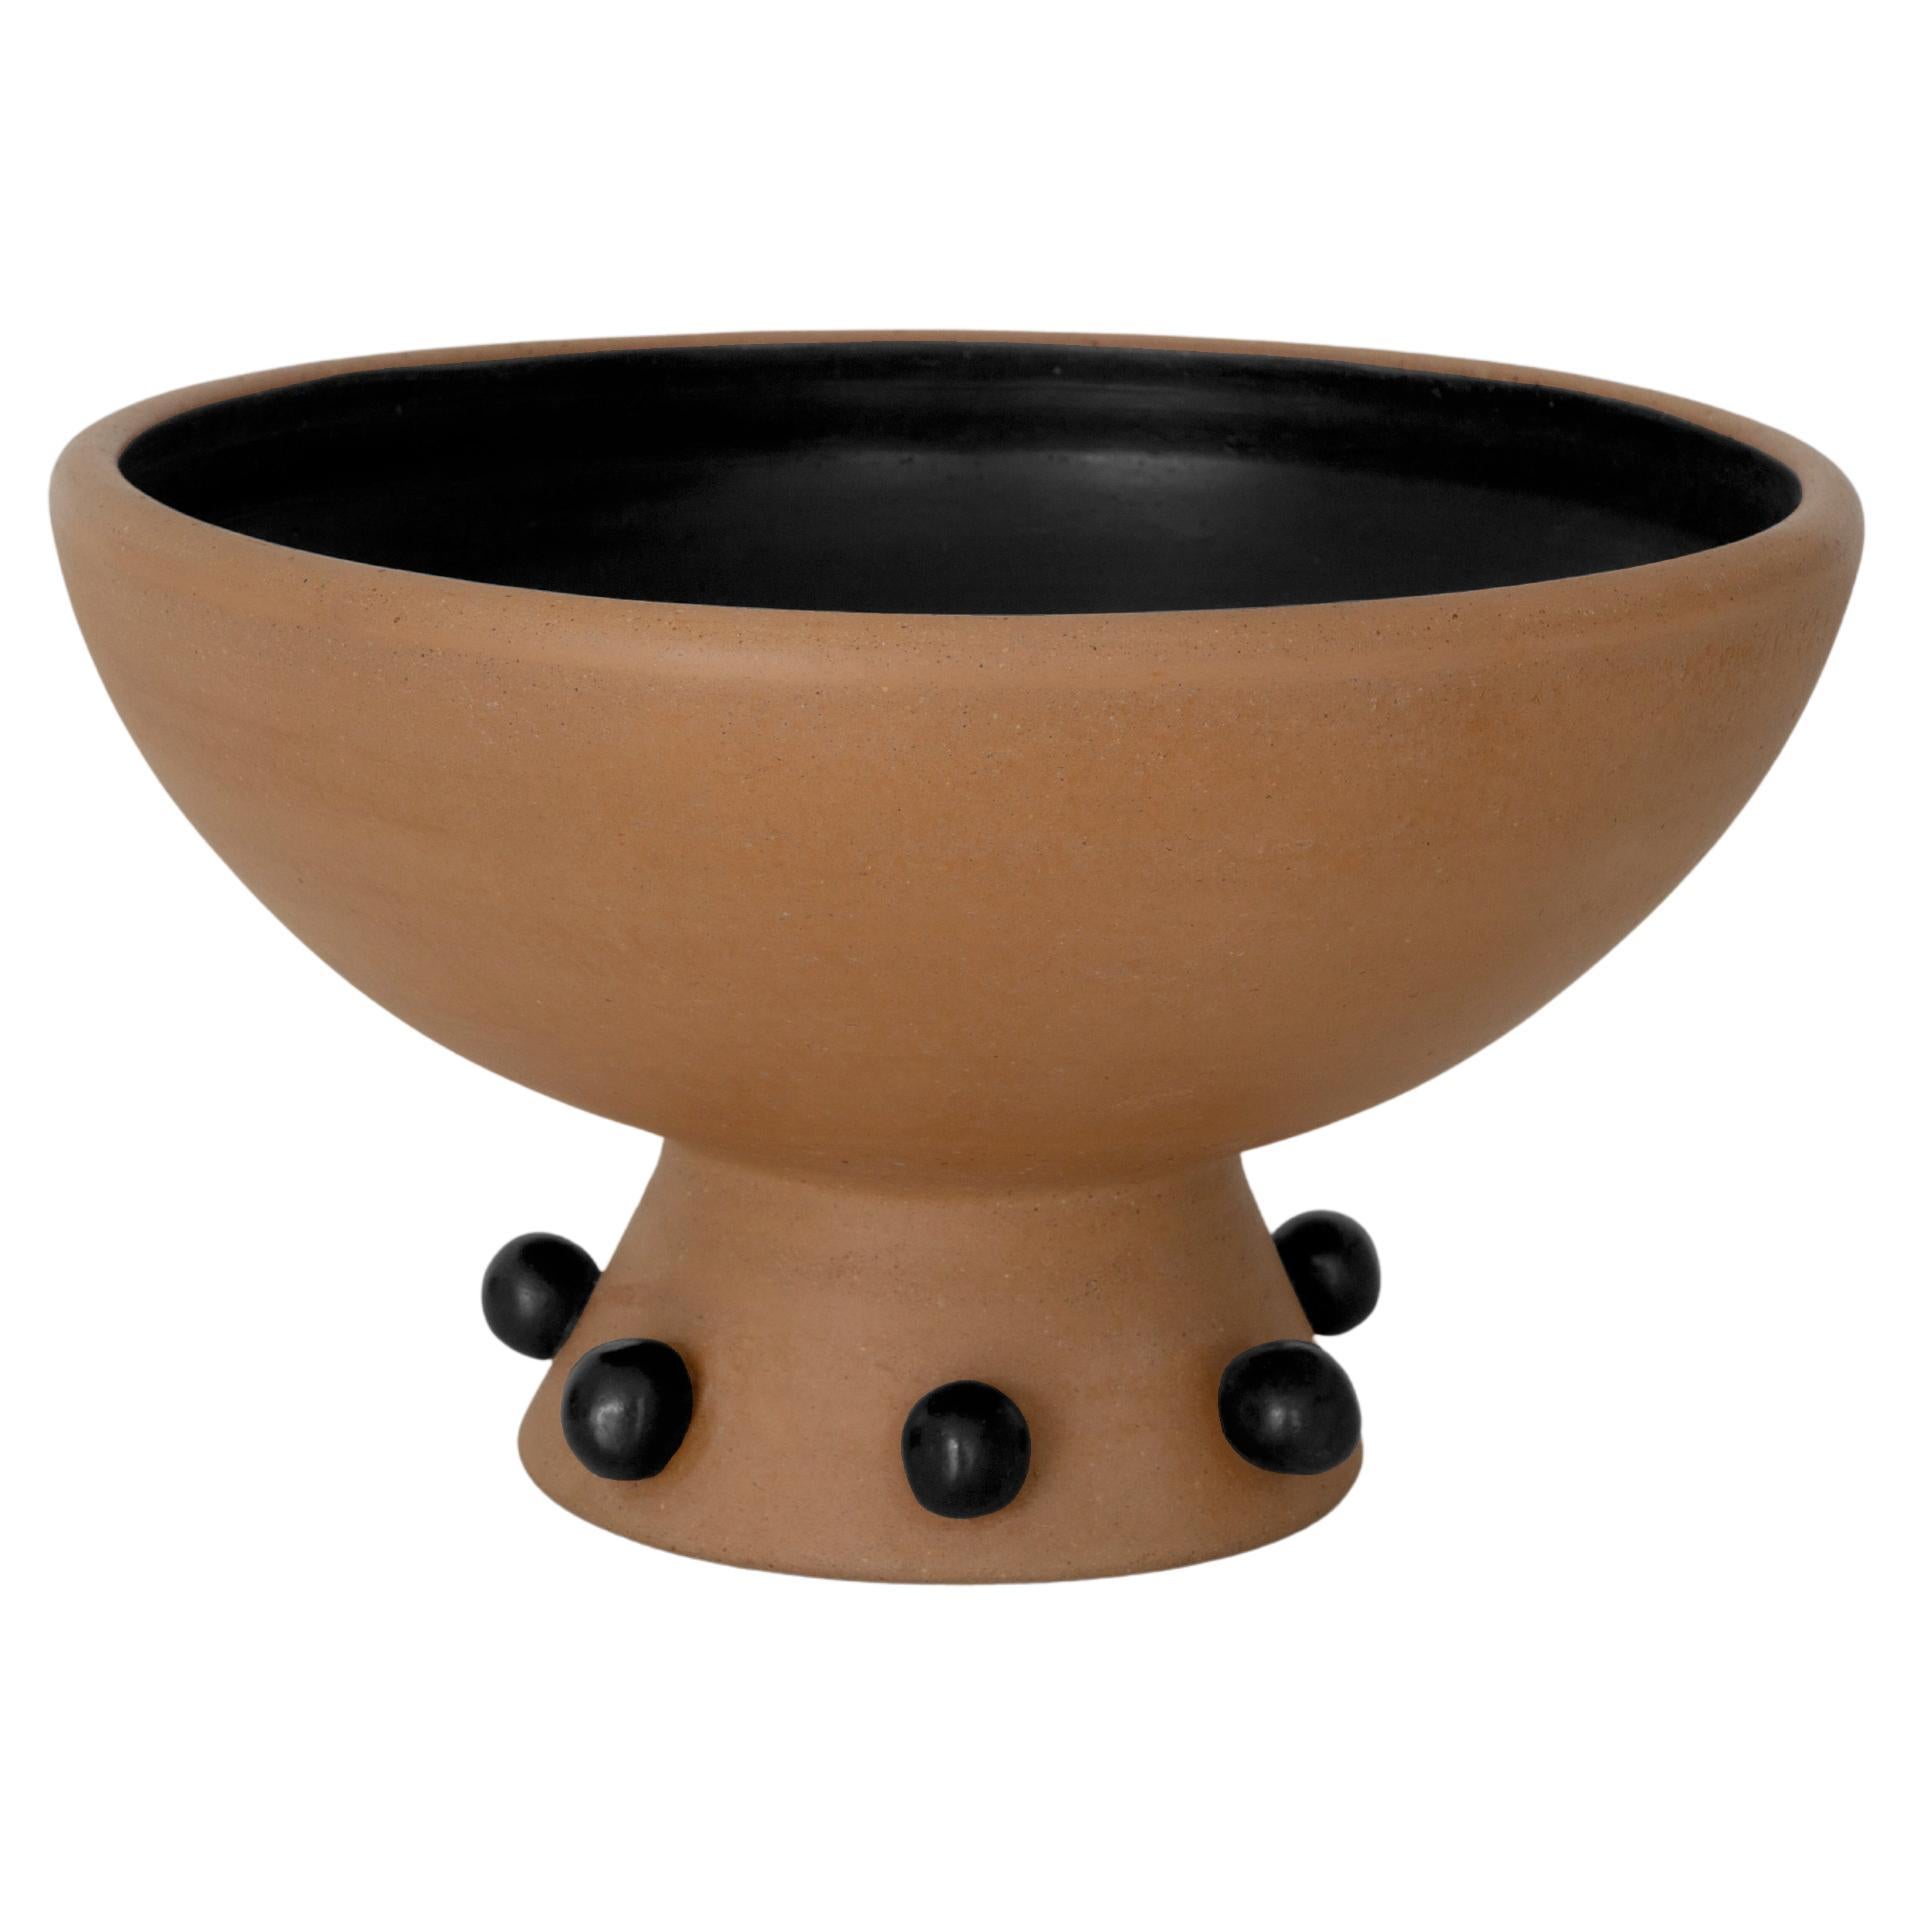 Decorative Clay Bowl/Vase Danzante 01. Smooth Soft Clay Finish. By Raíz Mx For Sale